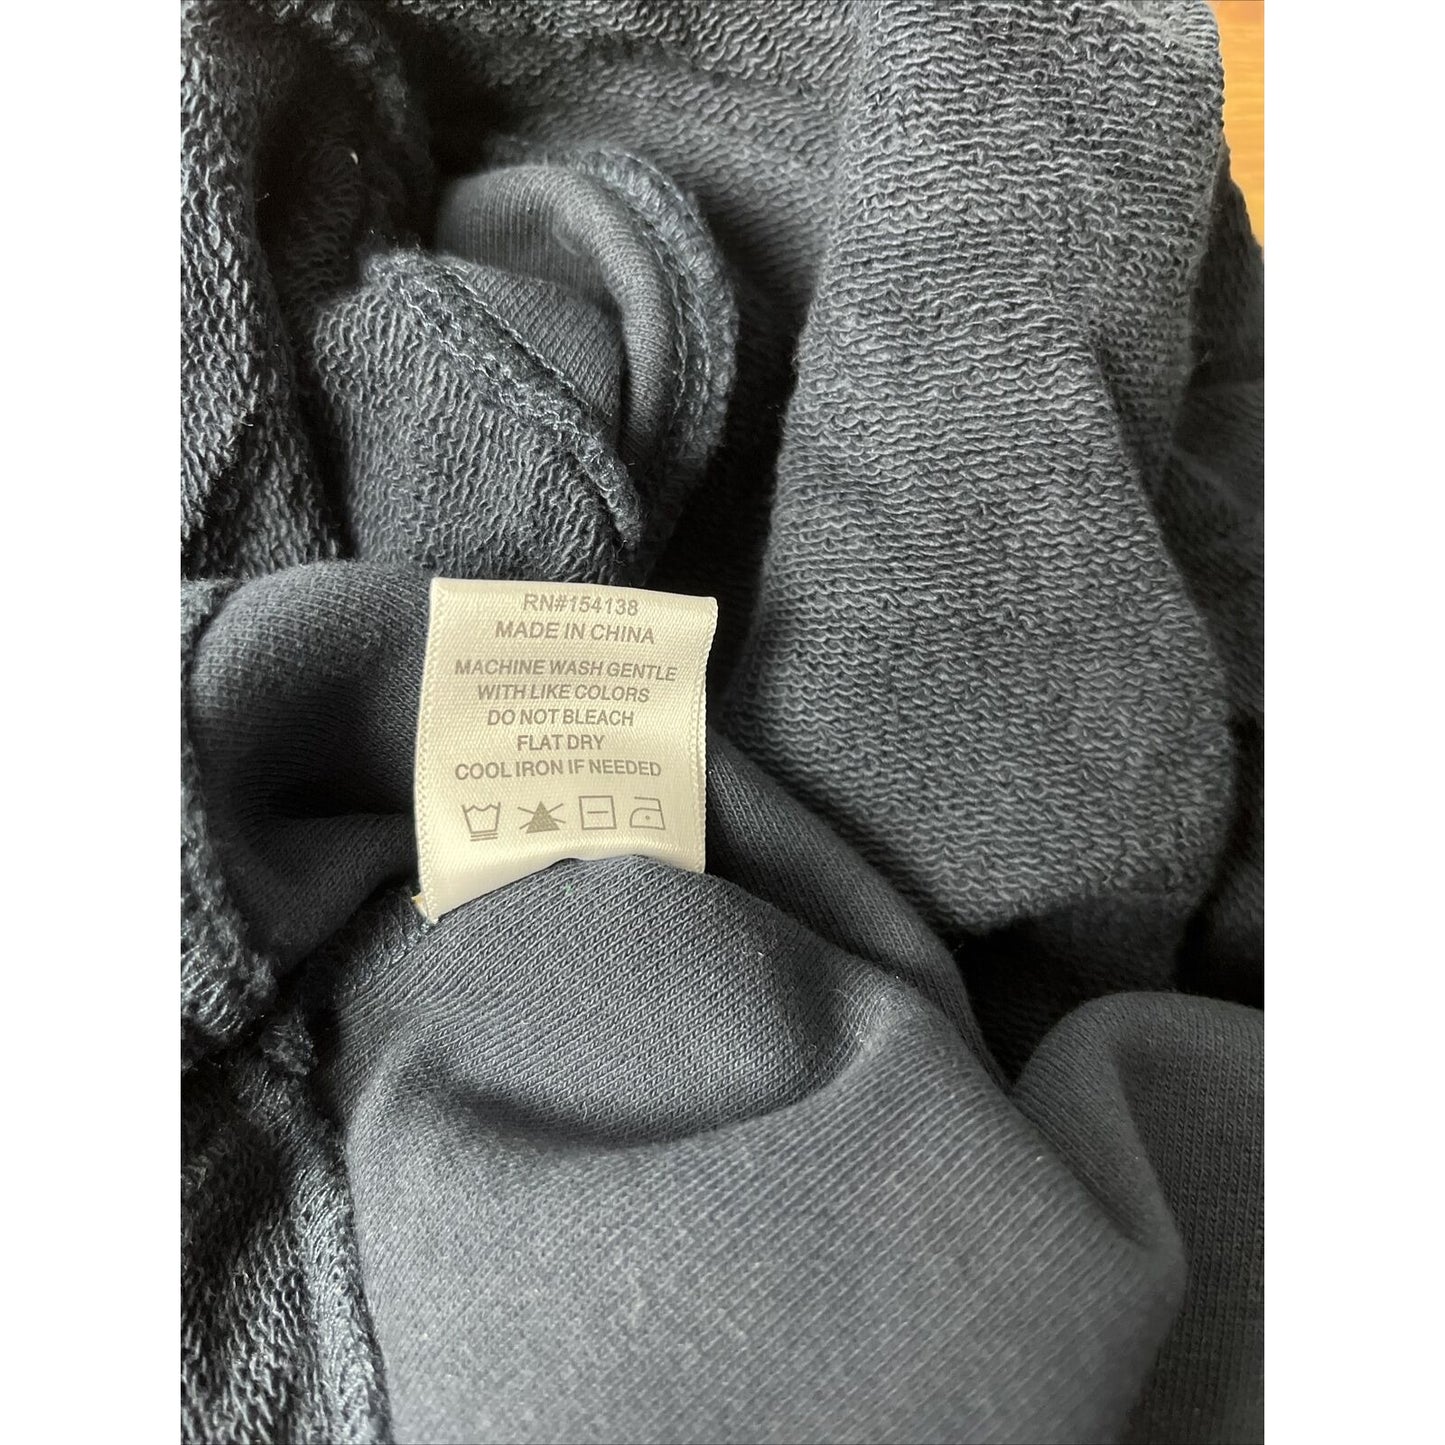 NWT Staud Crop Bungee Sweatshirt Sz Large, Retail $165